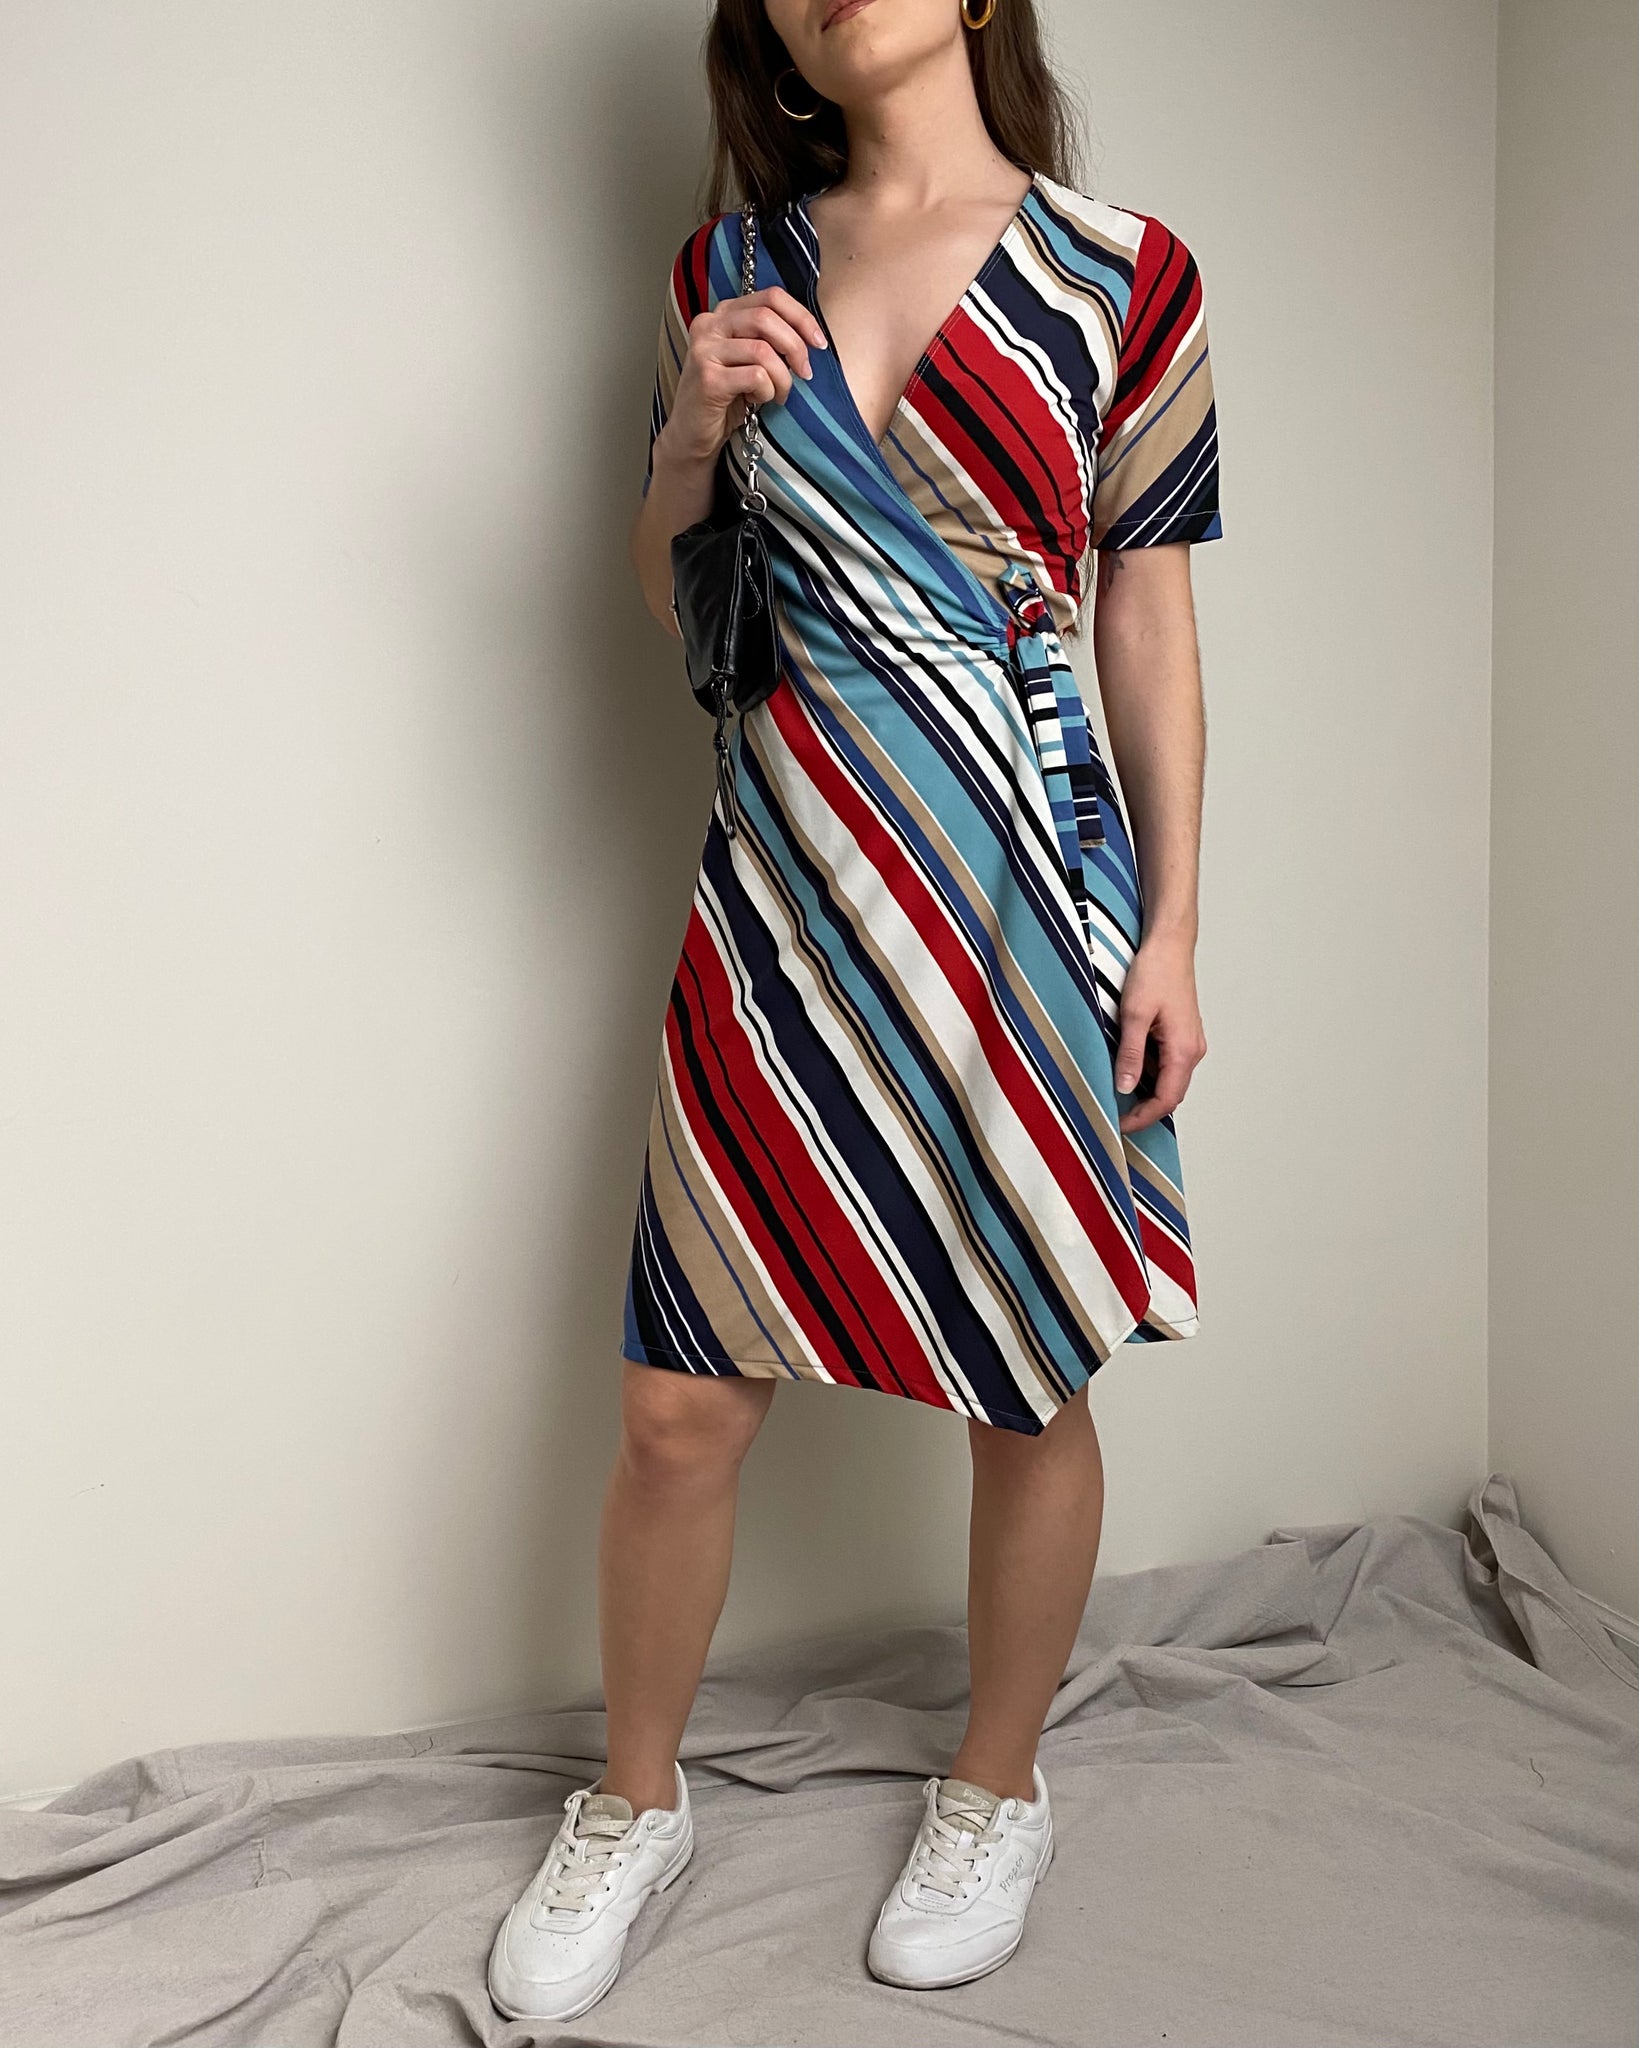 Colorful Striped Wrap Dress (size S)